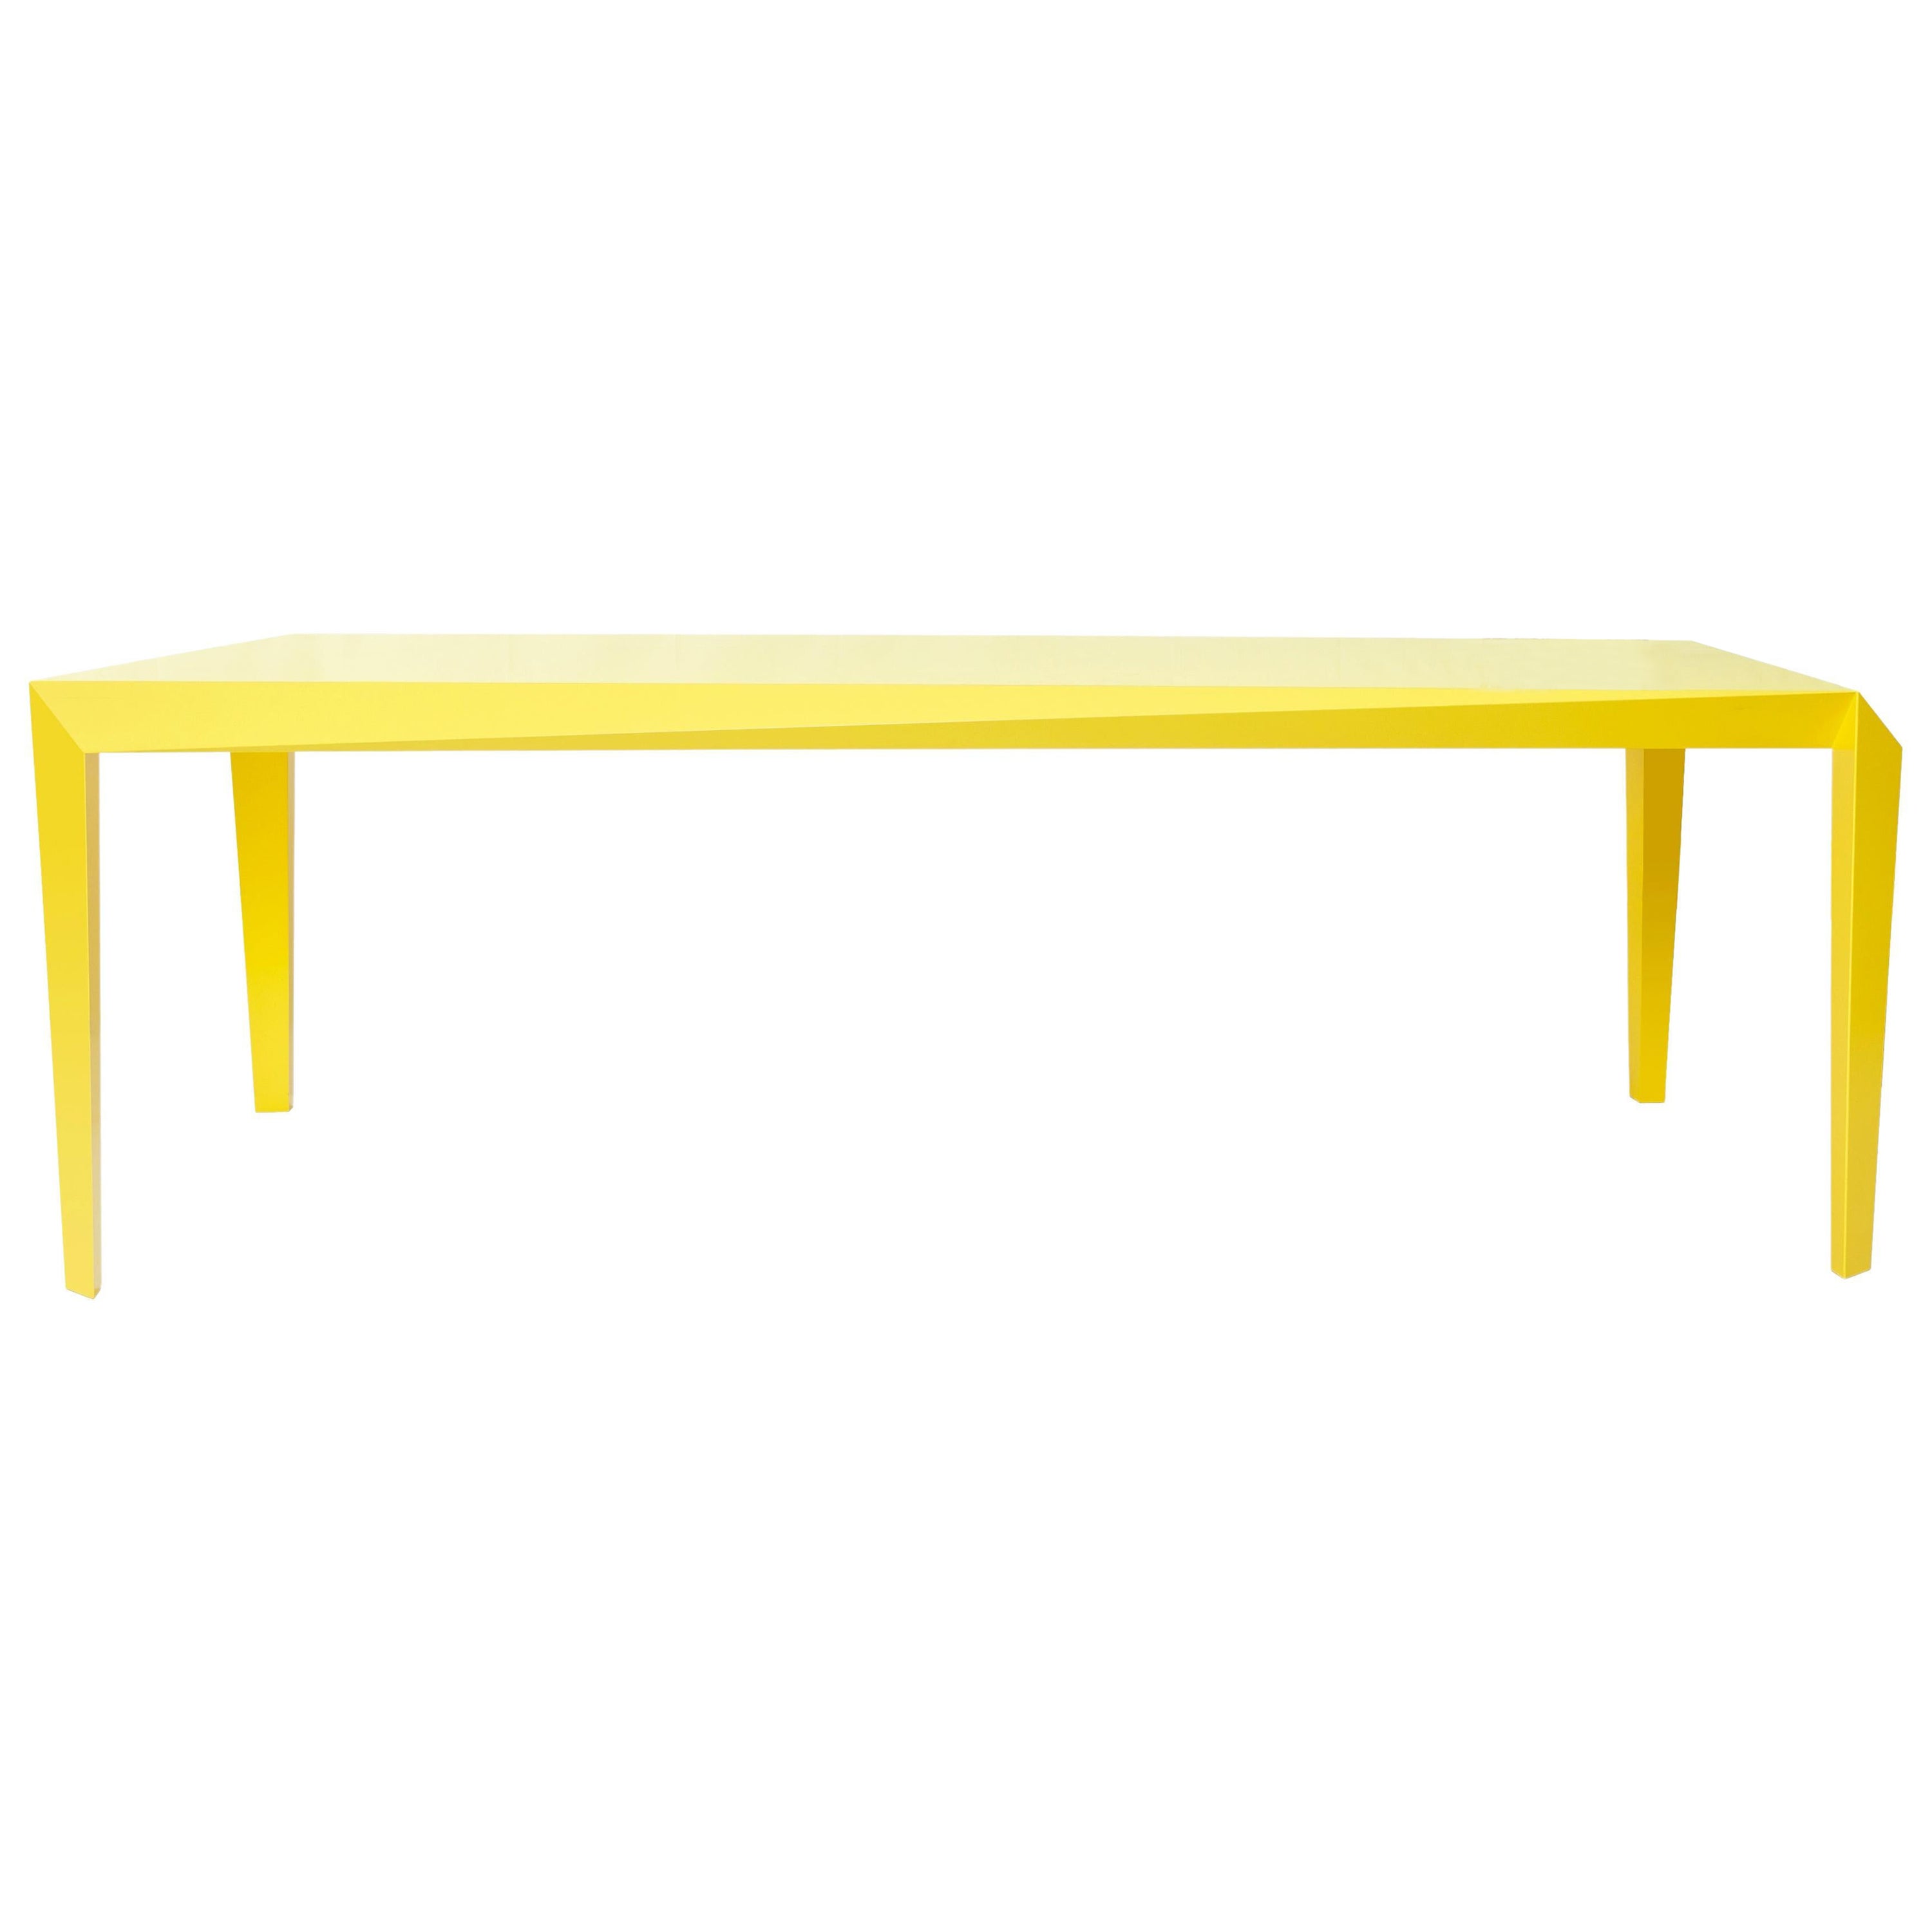 Faceted Volt Table, ''Yellow'' by Reinier de Jong